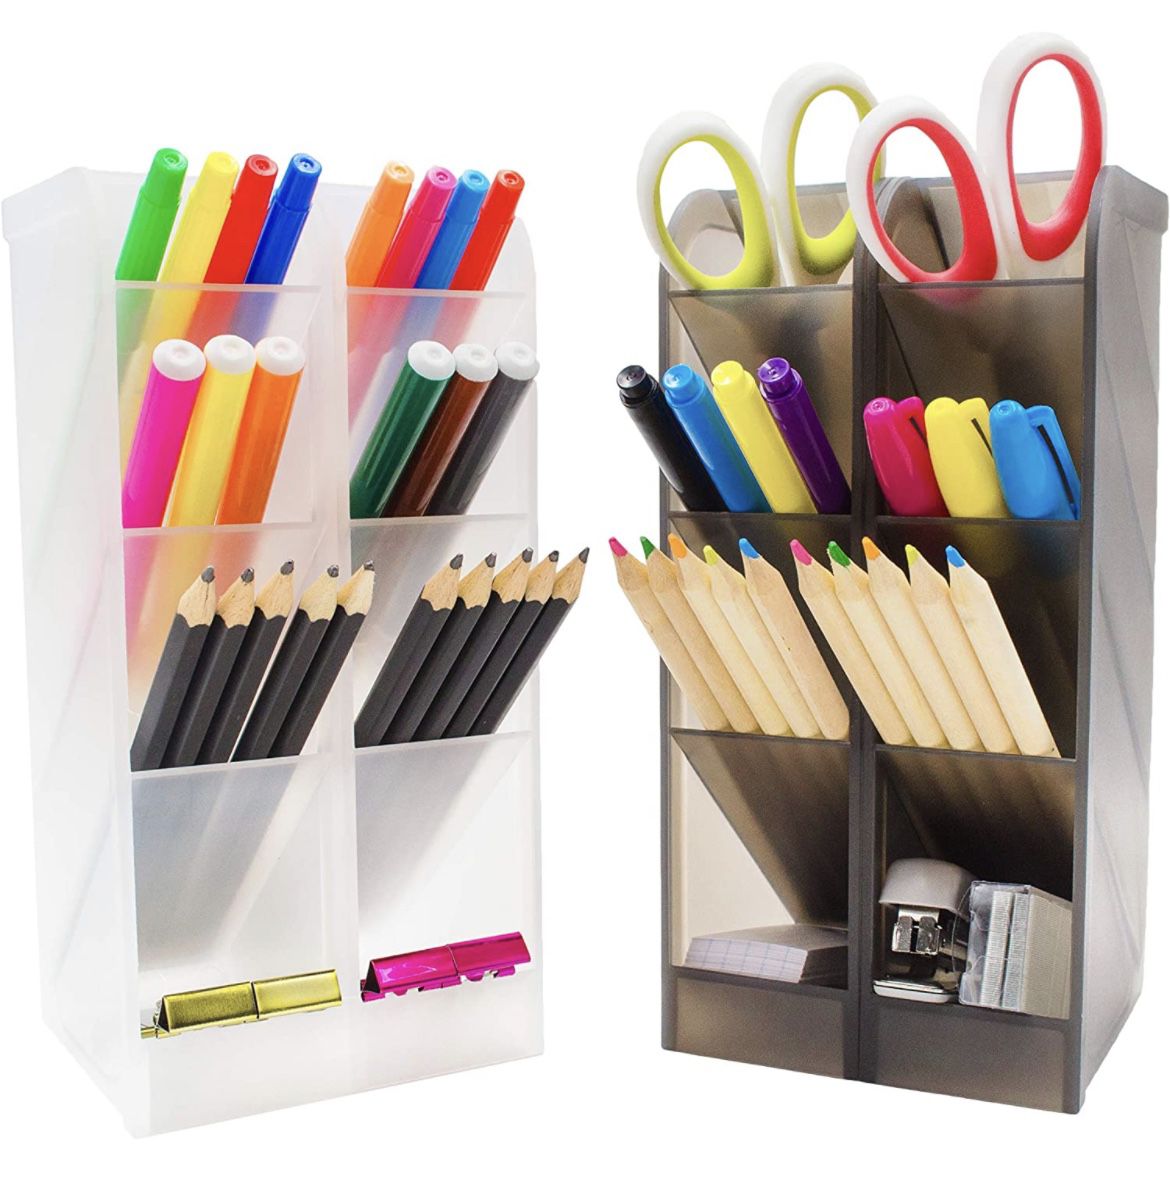 STYLIO Office Desk Organizer. Pen & Pencil Holder. Markers, Stationery Caddies Essential for Office/ Teacher Supplies. Translucent Black & White Caddy